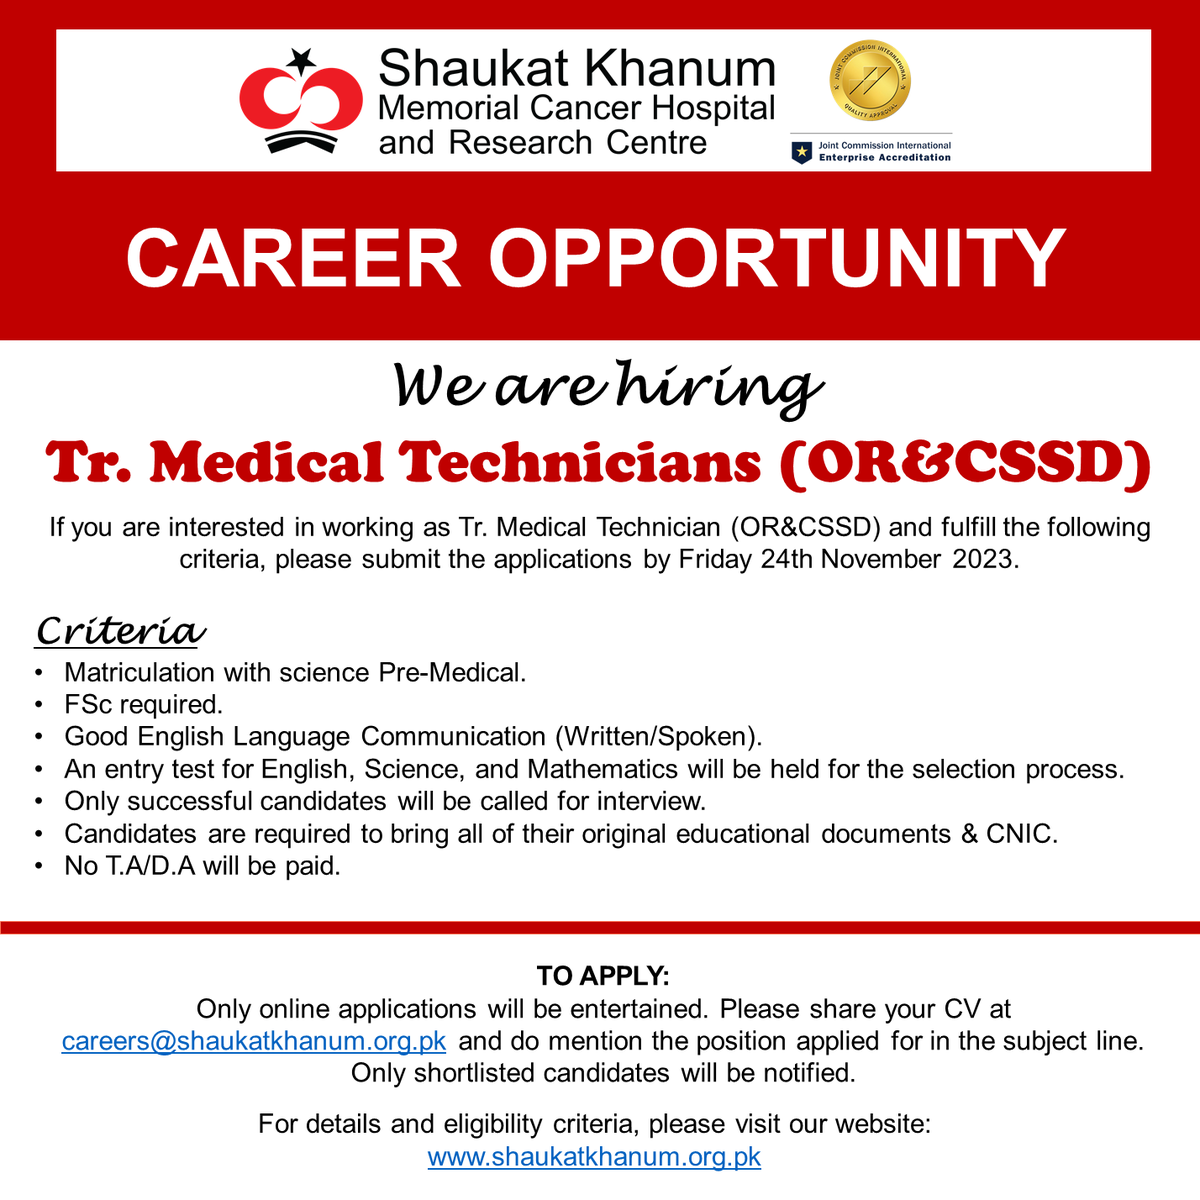 Career Opportunities at Shaukat Khanum Hospital, Lahore.

➡️ Tr. Medical Technicians (OR&CSSD)

Please submit the applications by Friday, 24th November 2023. 

✉️ careers@shaukatkhanum.org.pk

#CareersAtSKMCH #SKMCH #JobAlert #JobsInLahore #NursingJobs